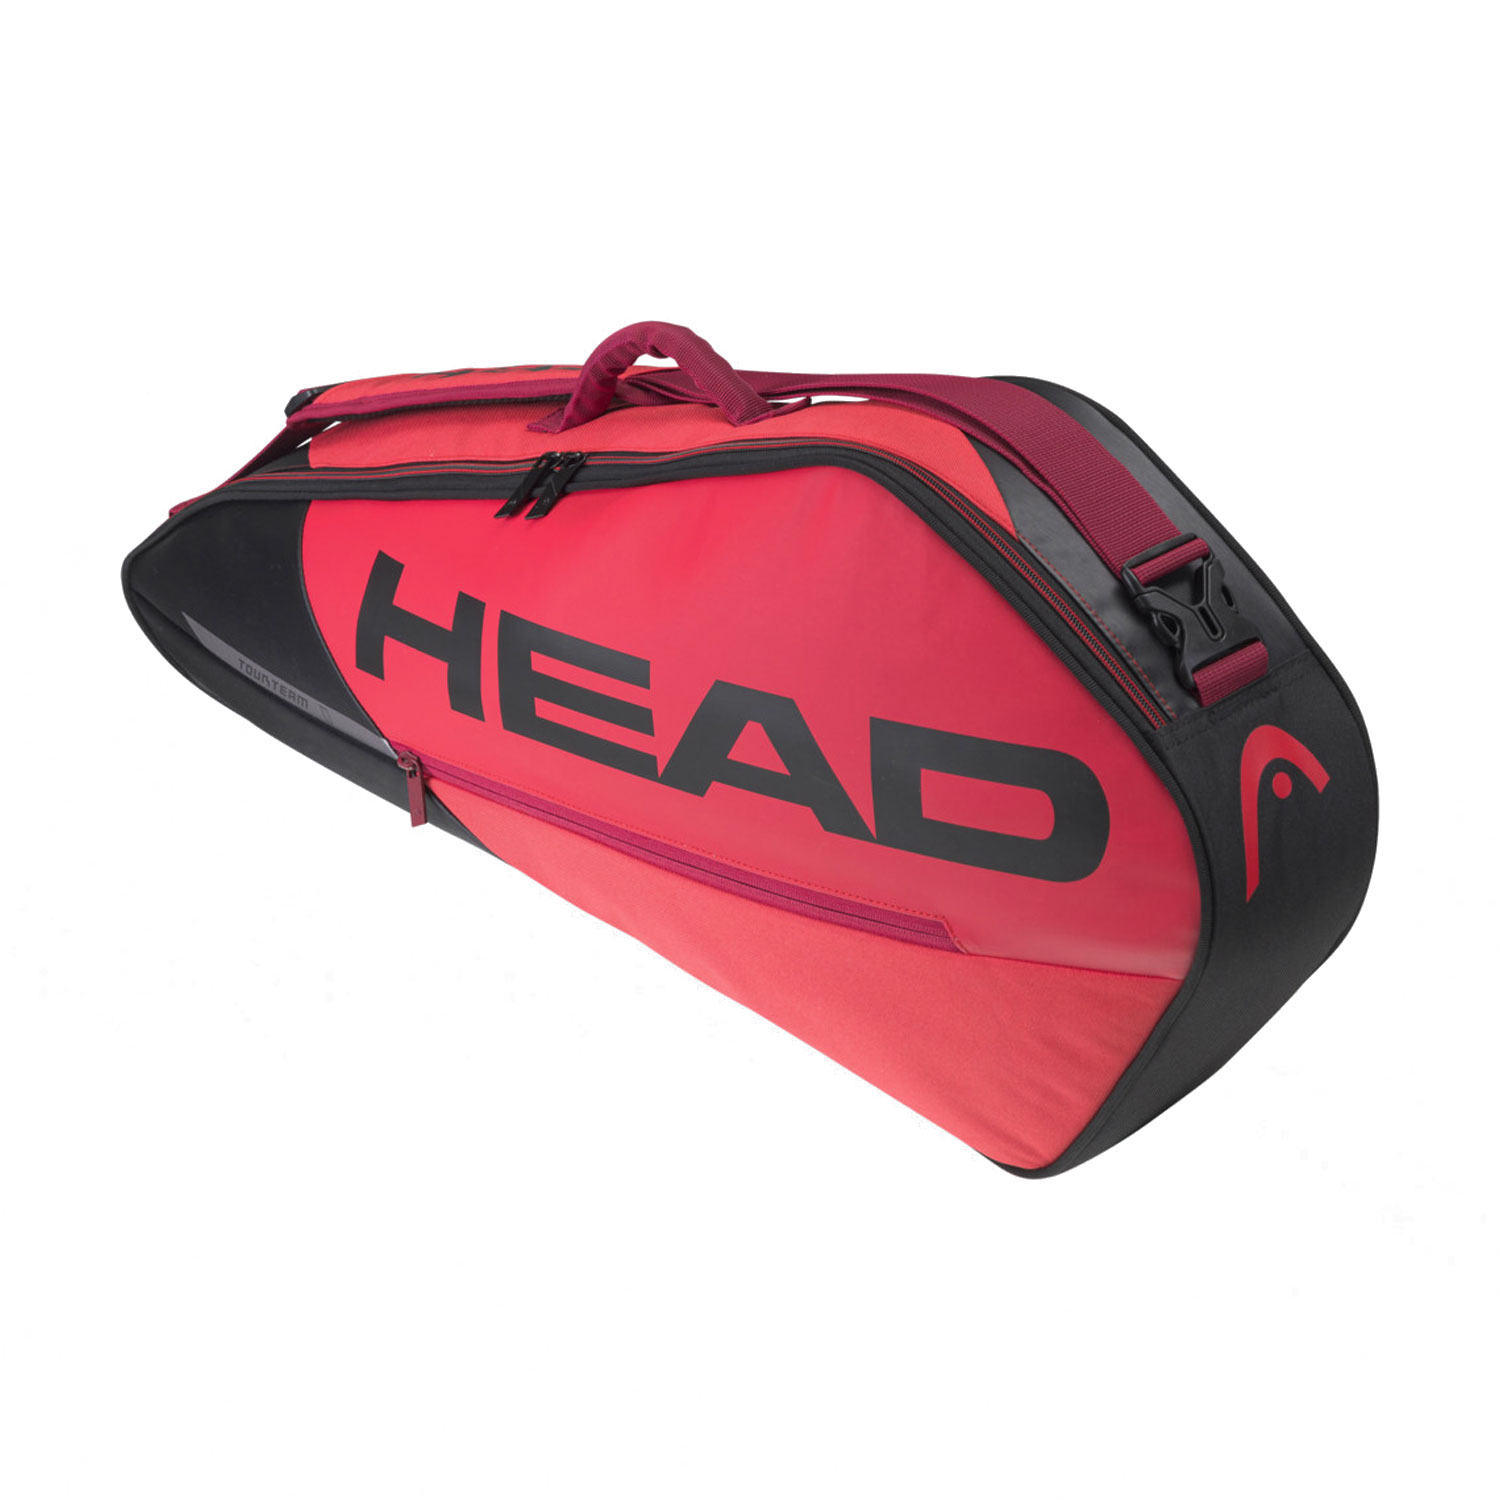 Head Tour Team x 3 Pro Bag - Black/Red